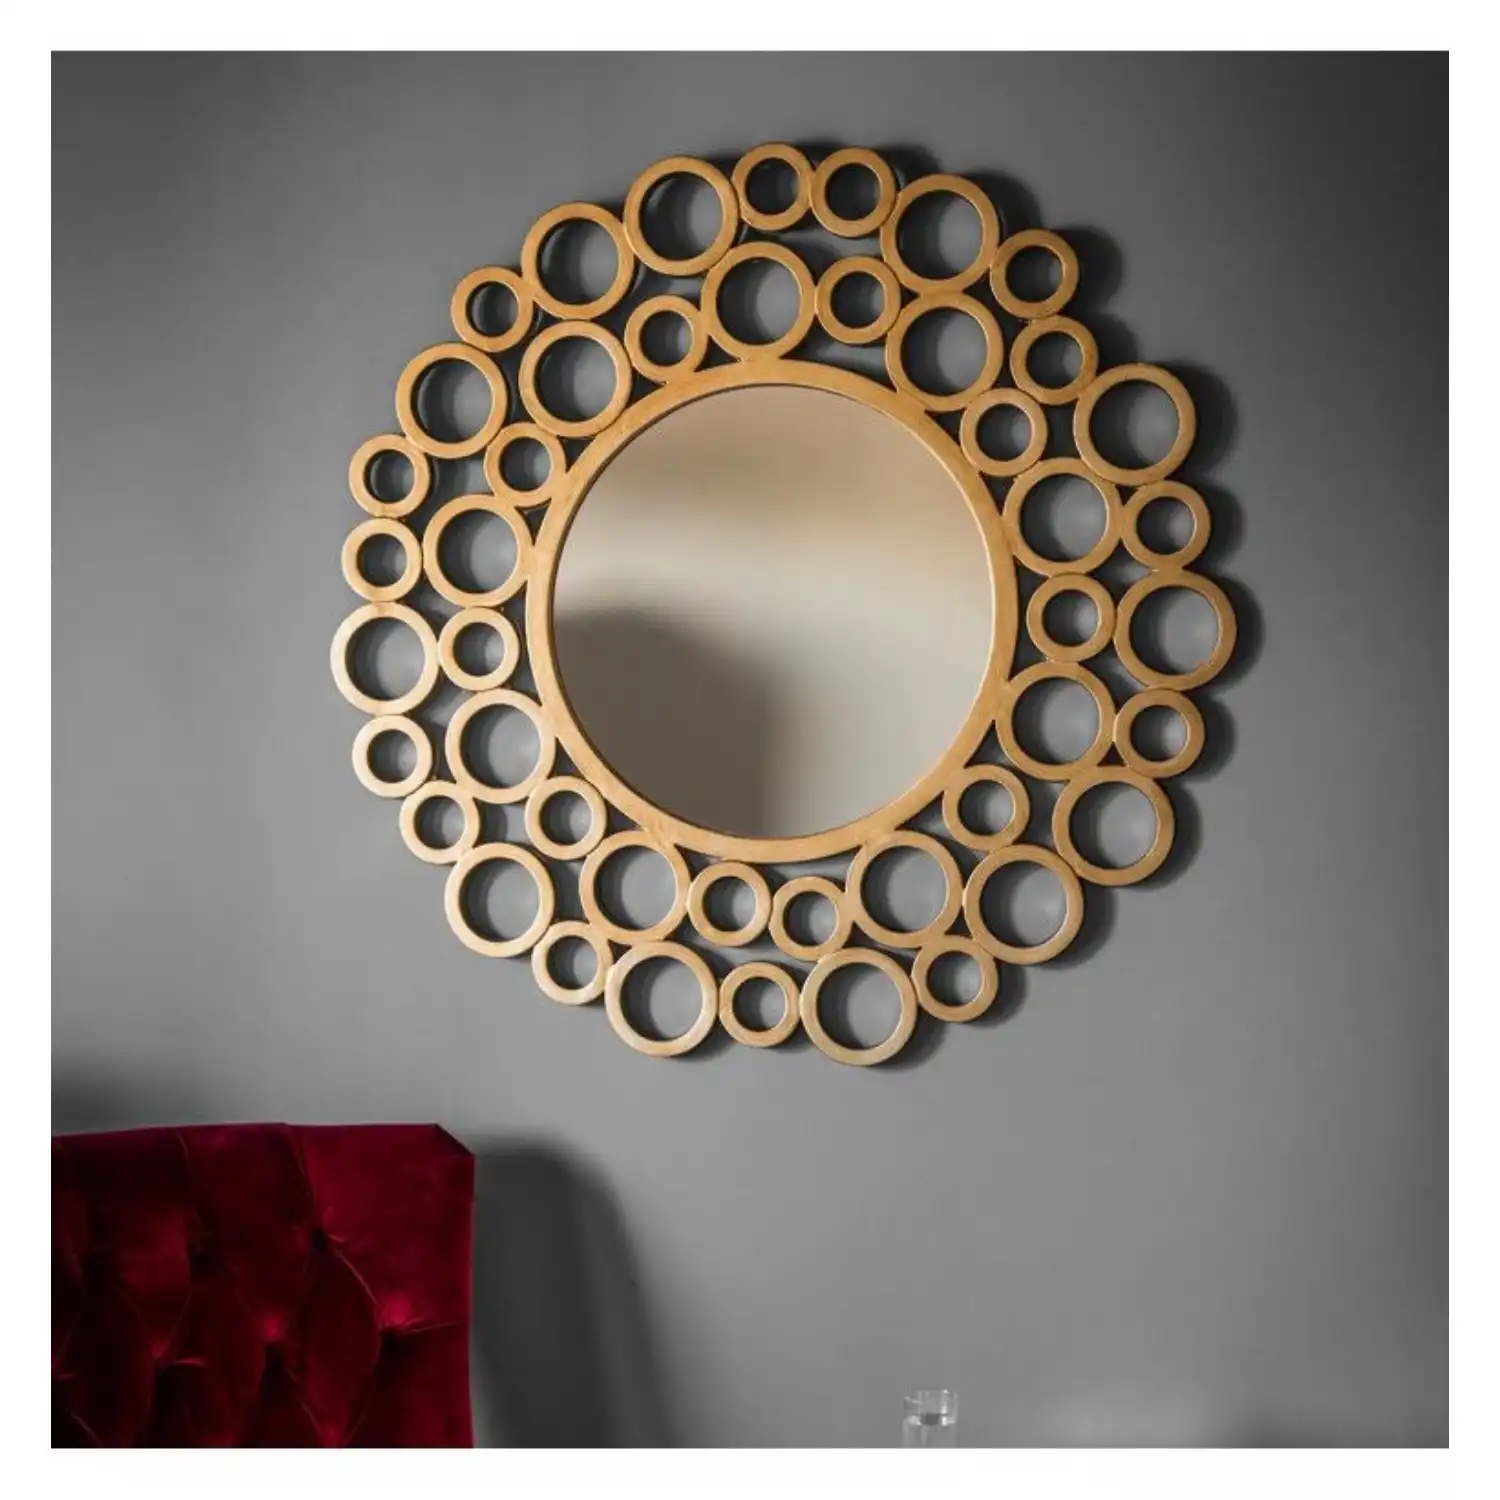 Gold Multi Rings Circles Round Metal Wall Mirror